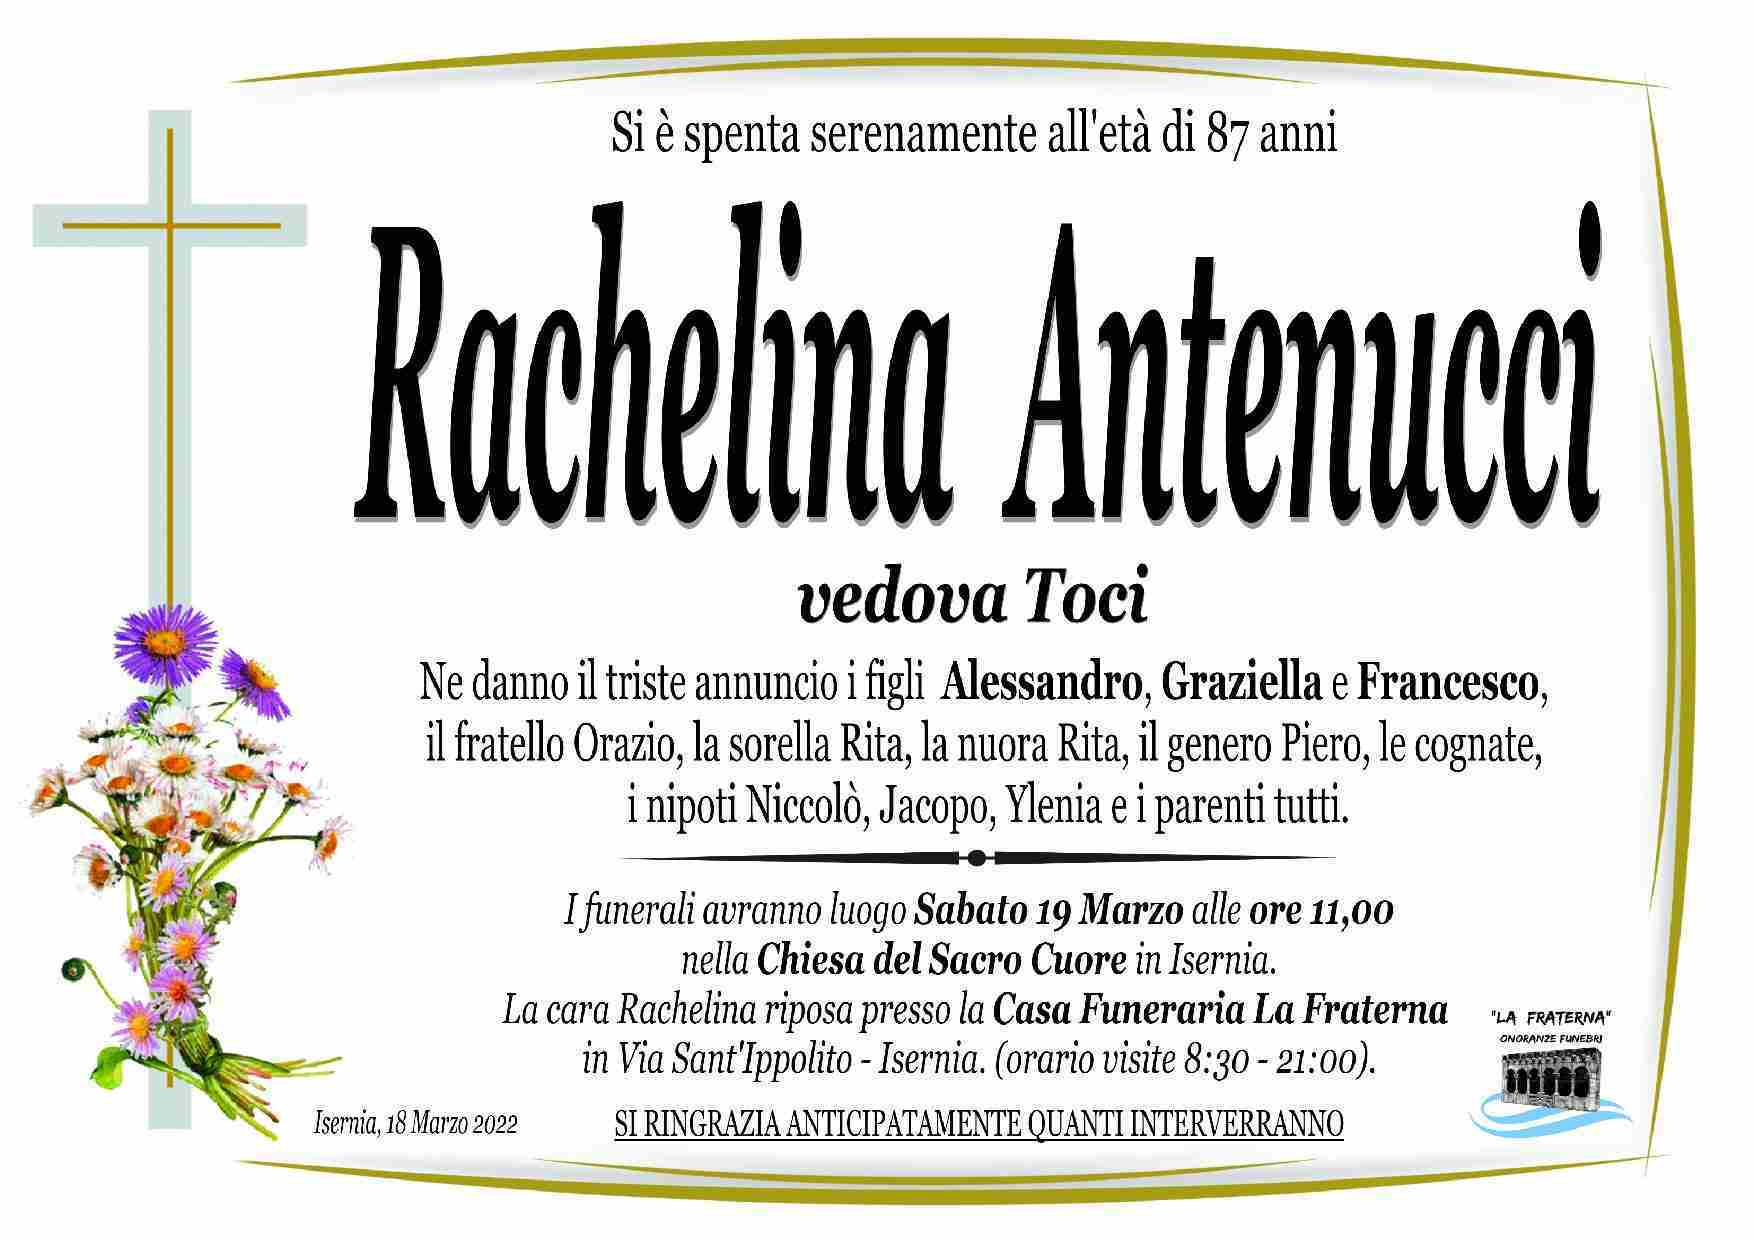 Rachelina Antenucci